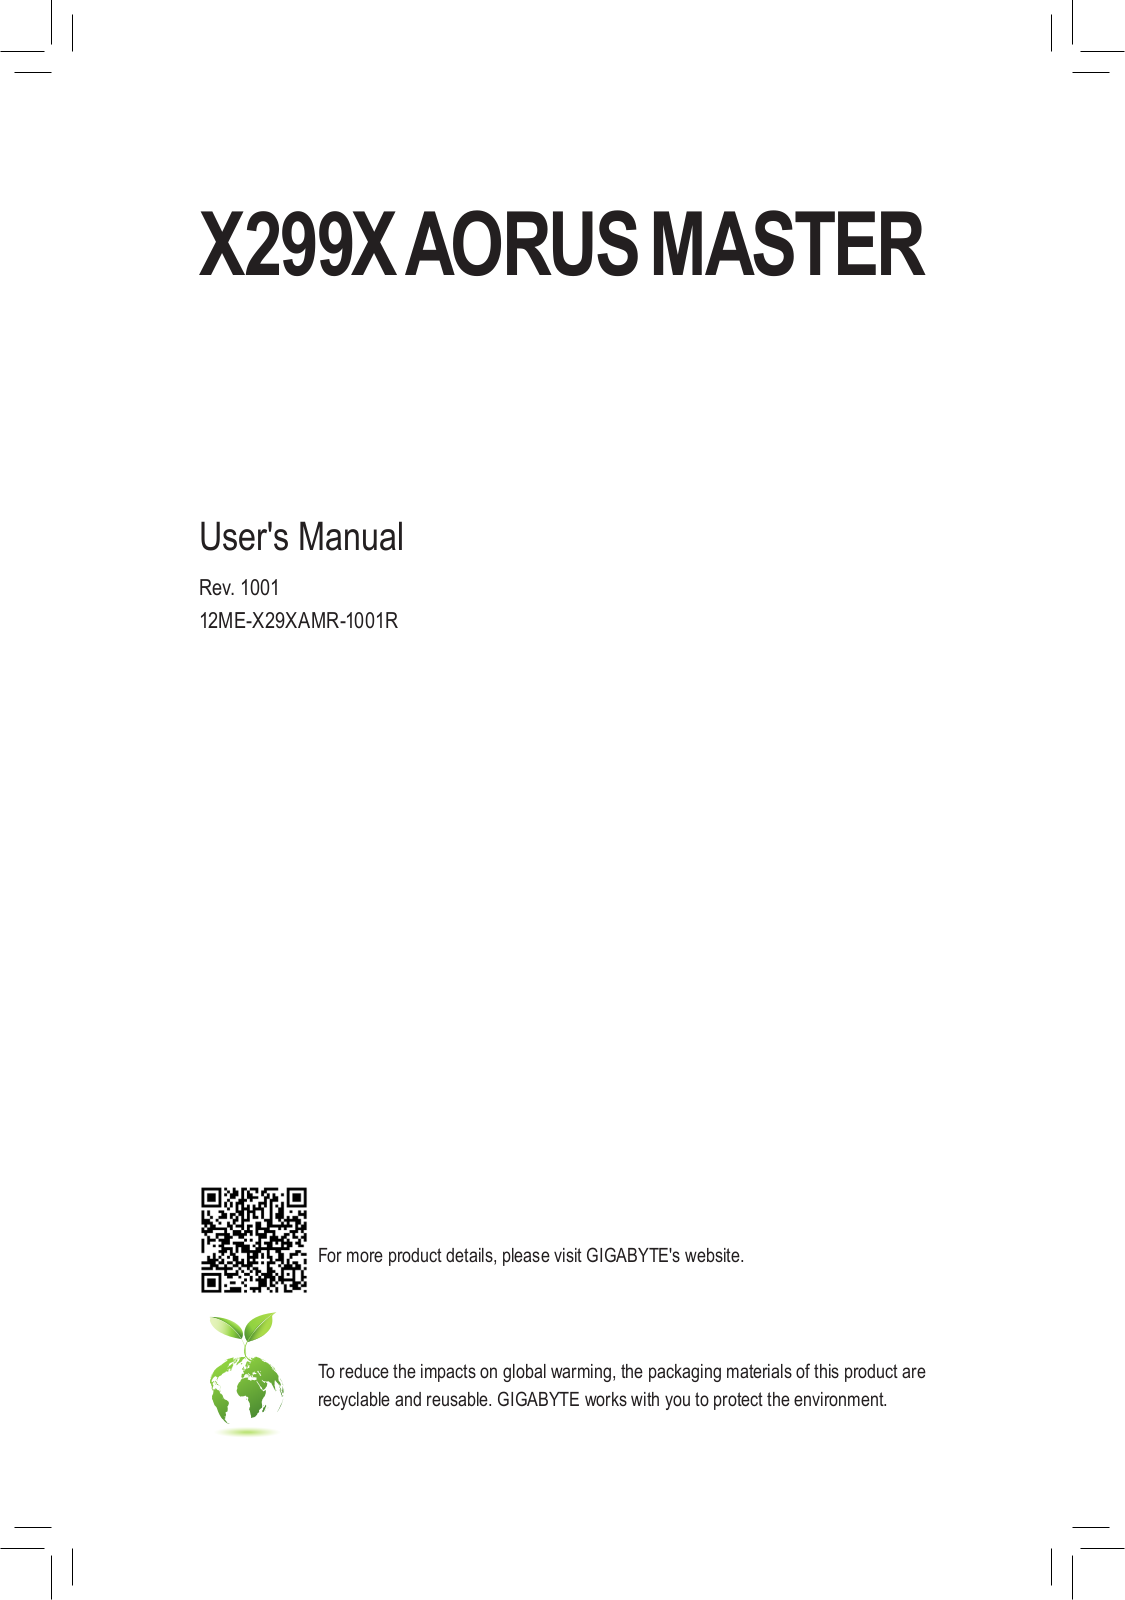 Gigabyte X299X Aorus Master Manual